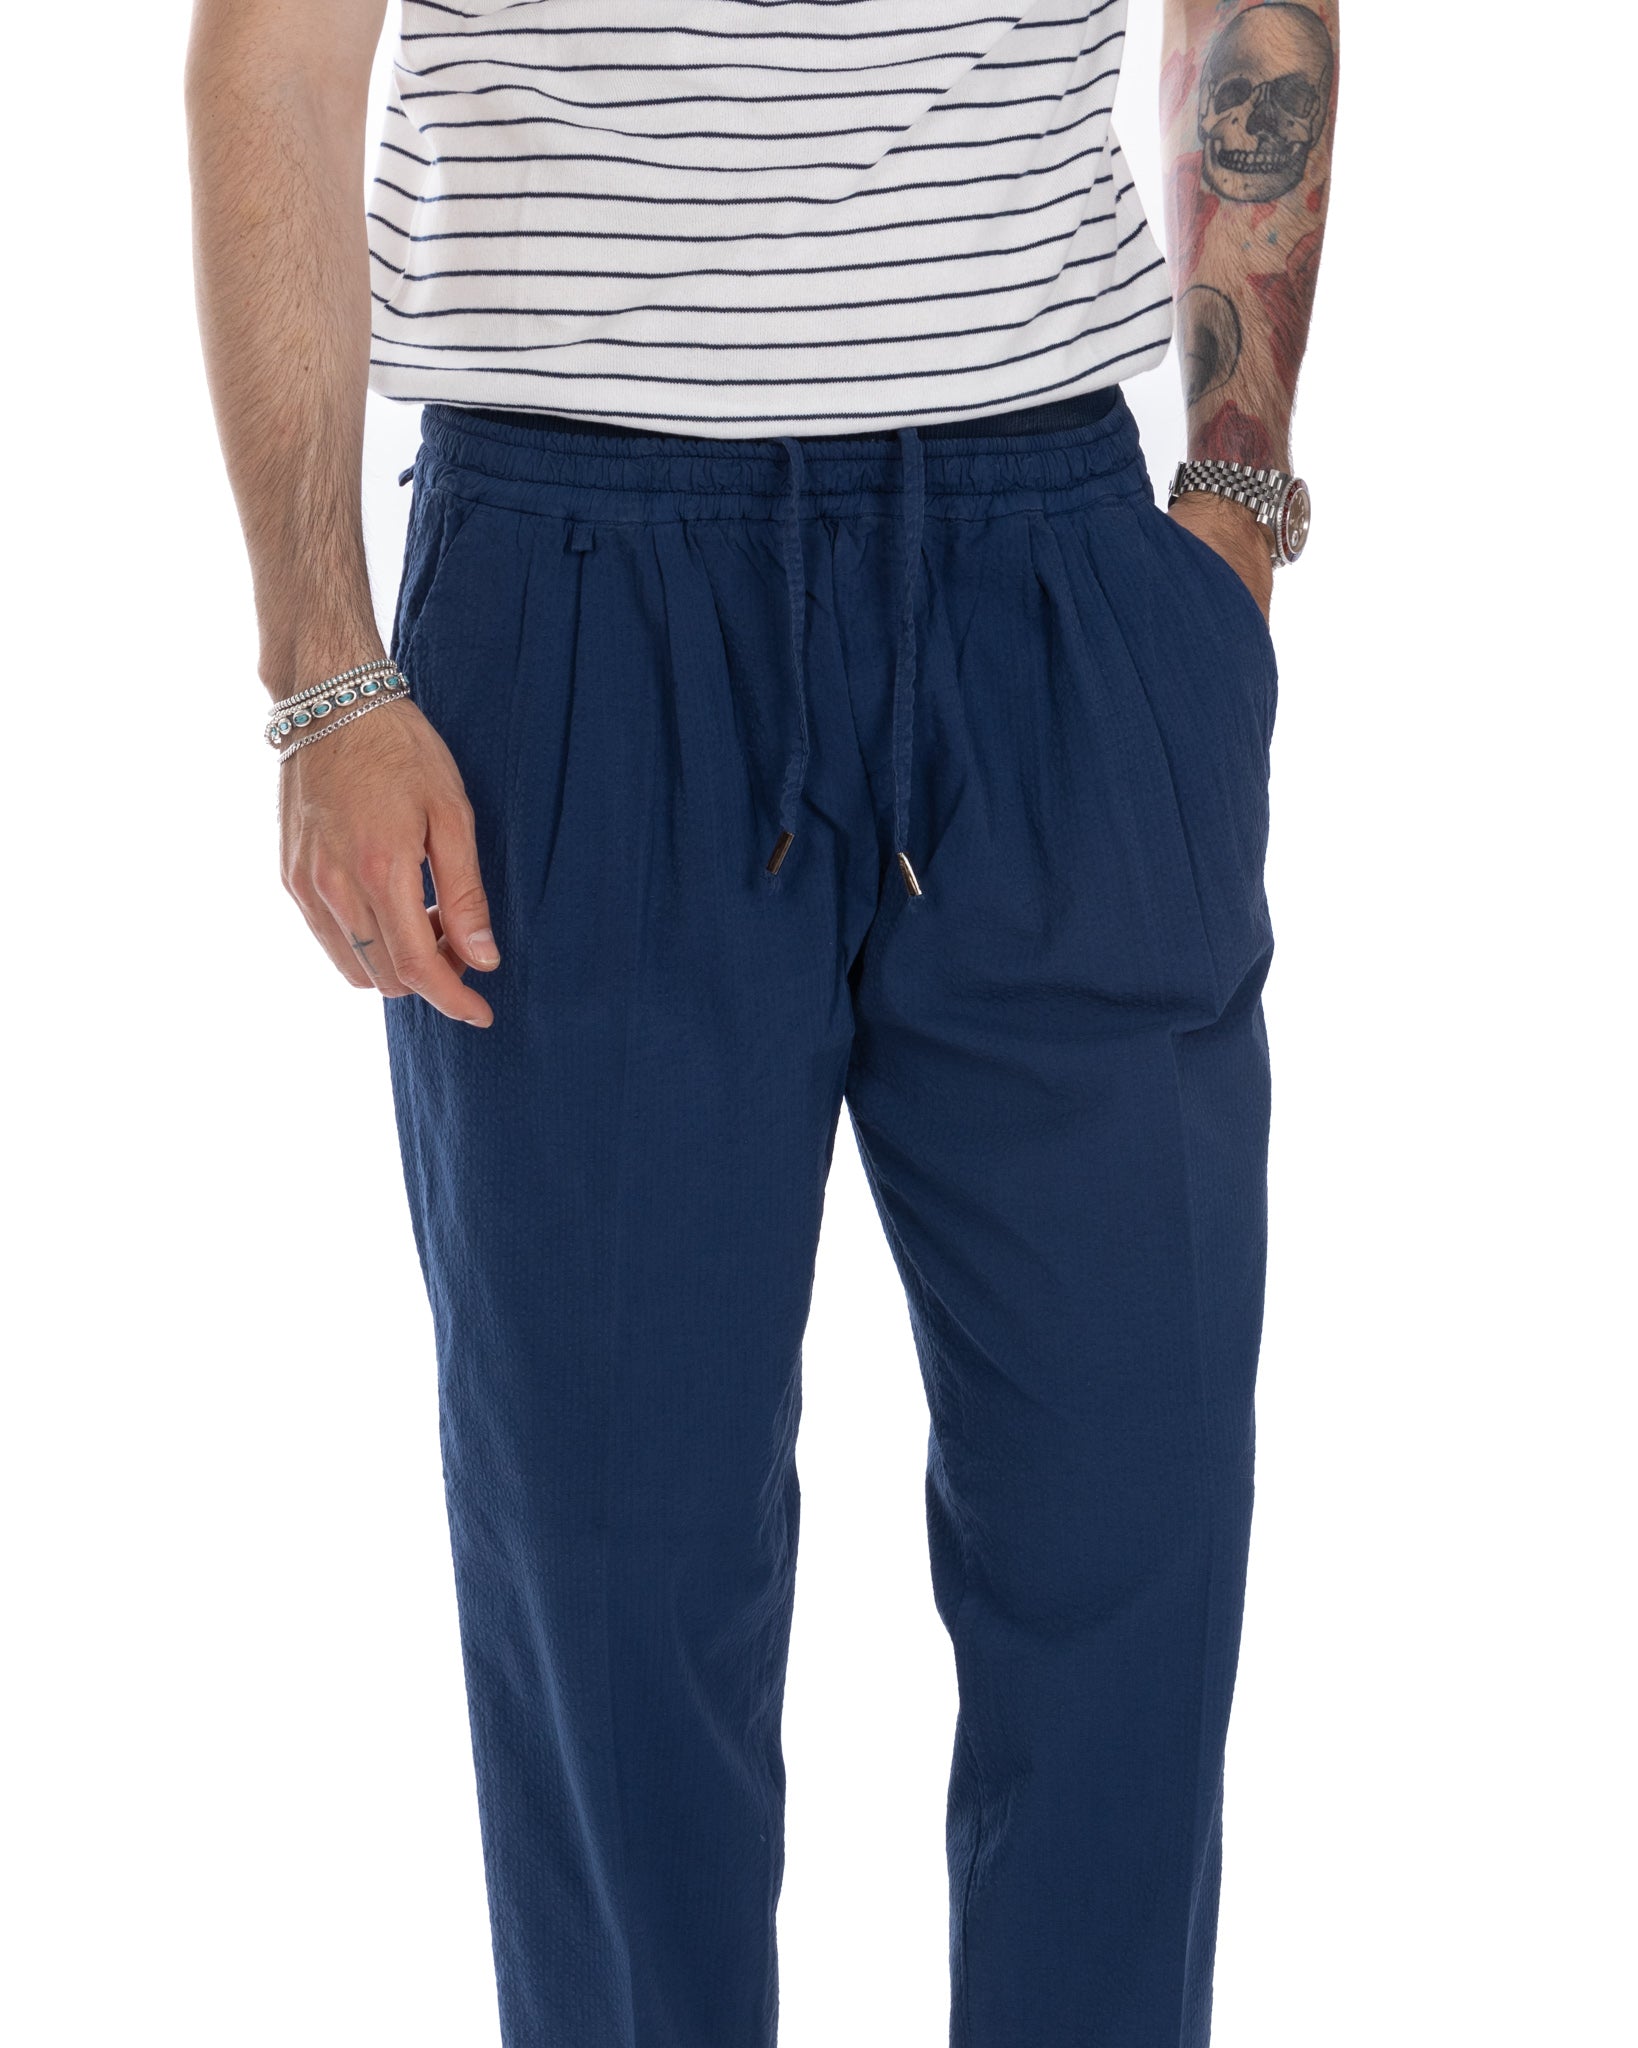 Liam - cornflower blue embossed trousers